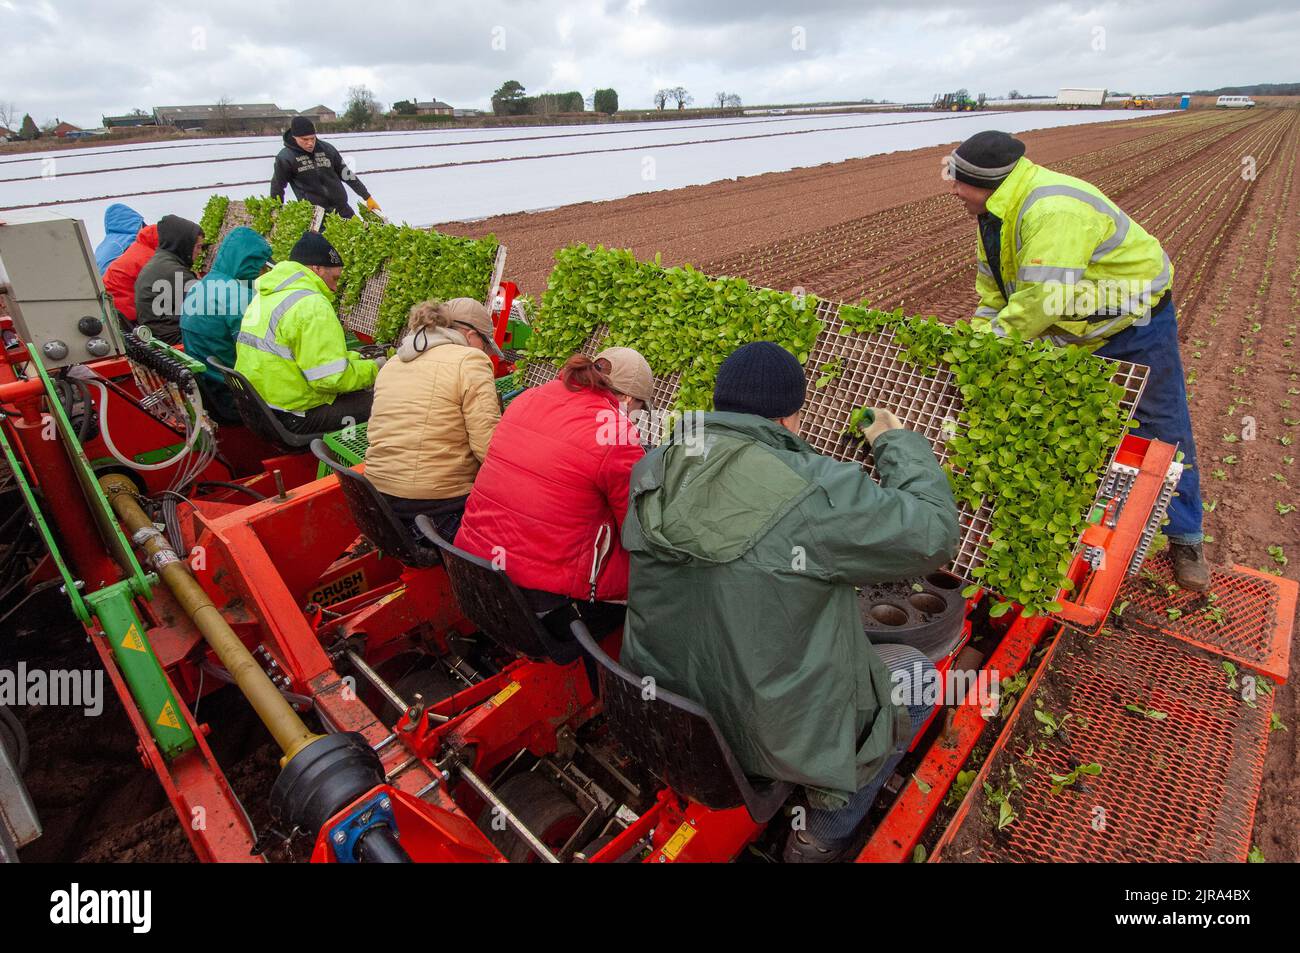 Workers on a 16 row machine planting Iceberg lettuce, Shropshire, UK Stock Photo